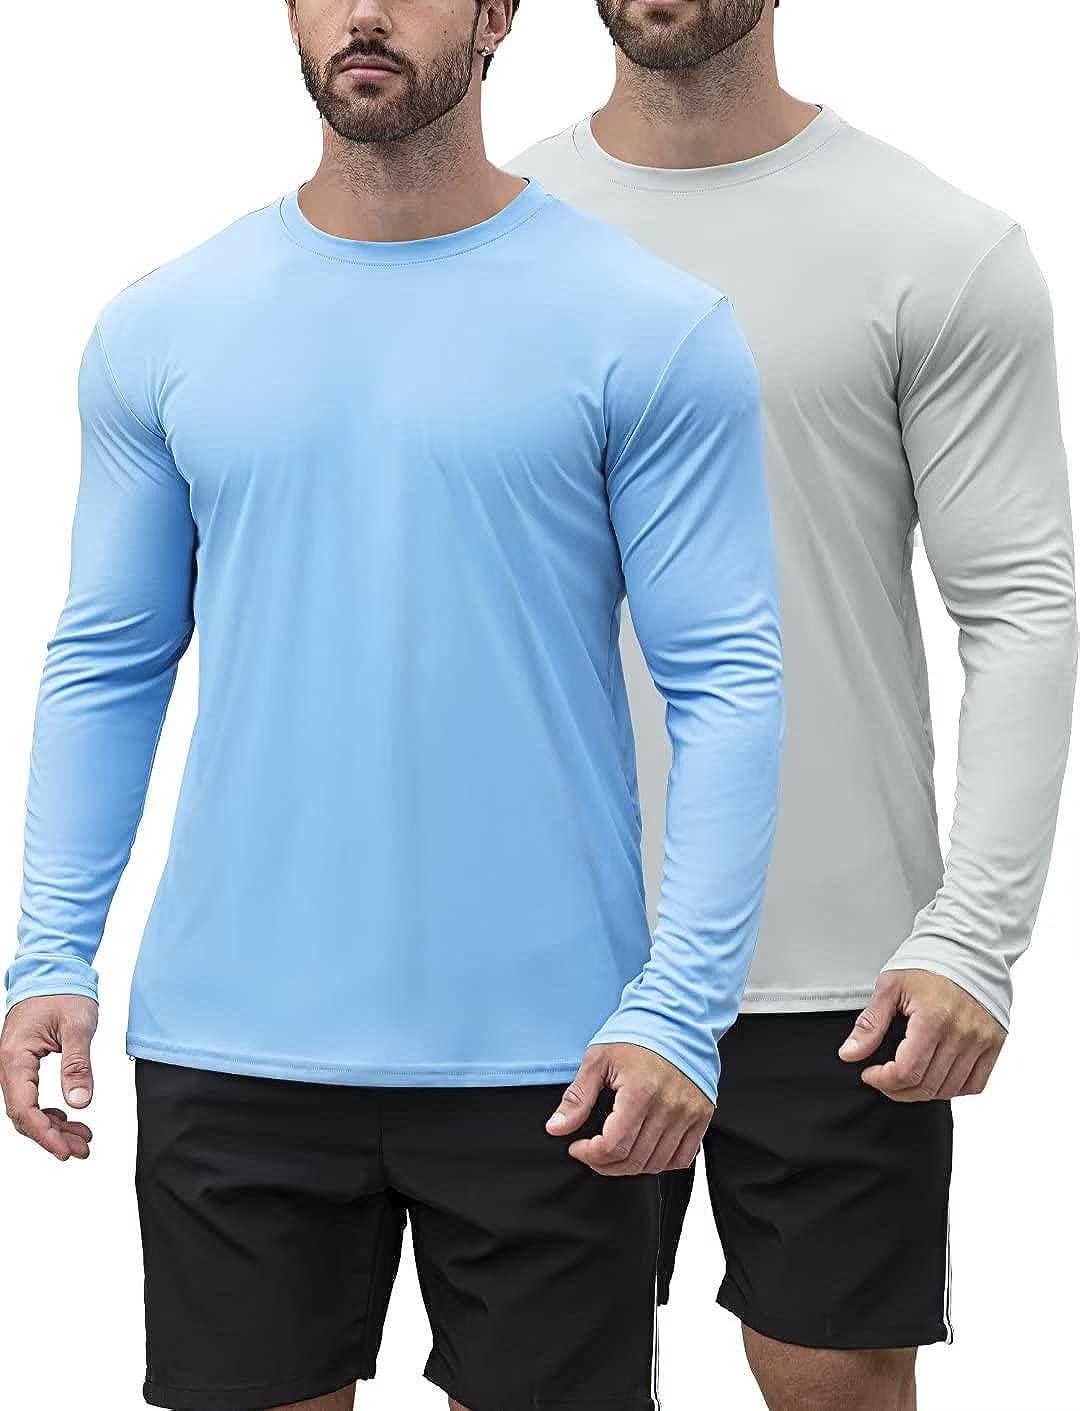 FISHEAL Men's Performance Fishing Hoodie Shirt - UPF 50+ Camo Long Sleeve  Thumbholes Shirts with Mesh